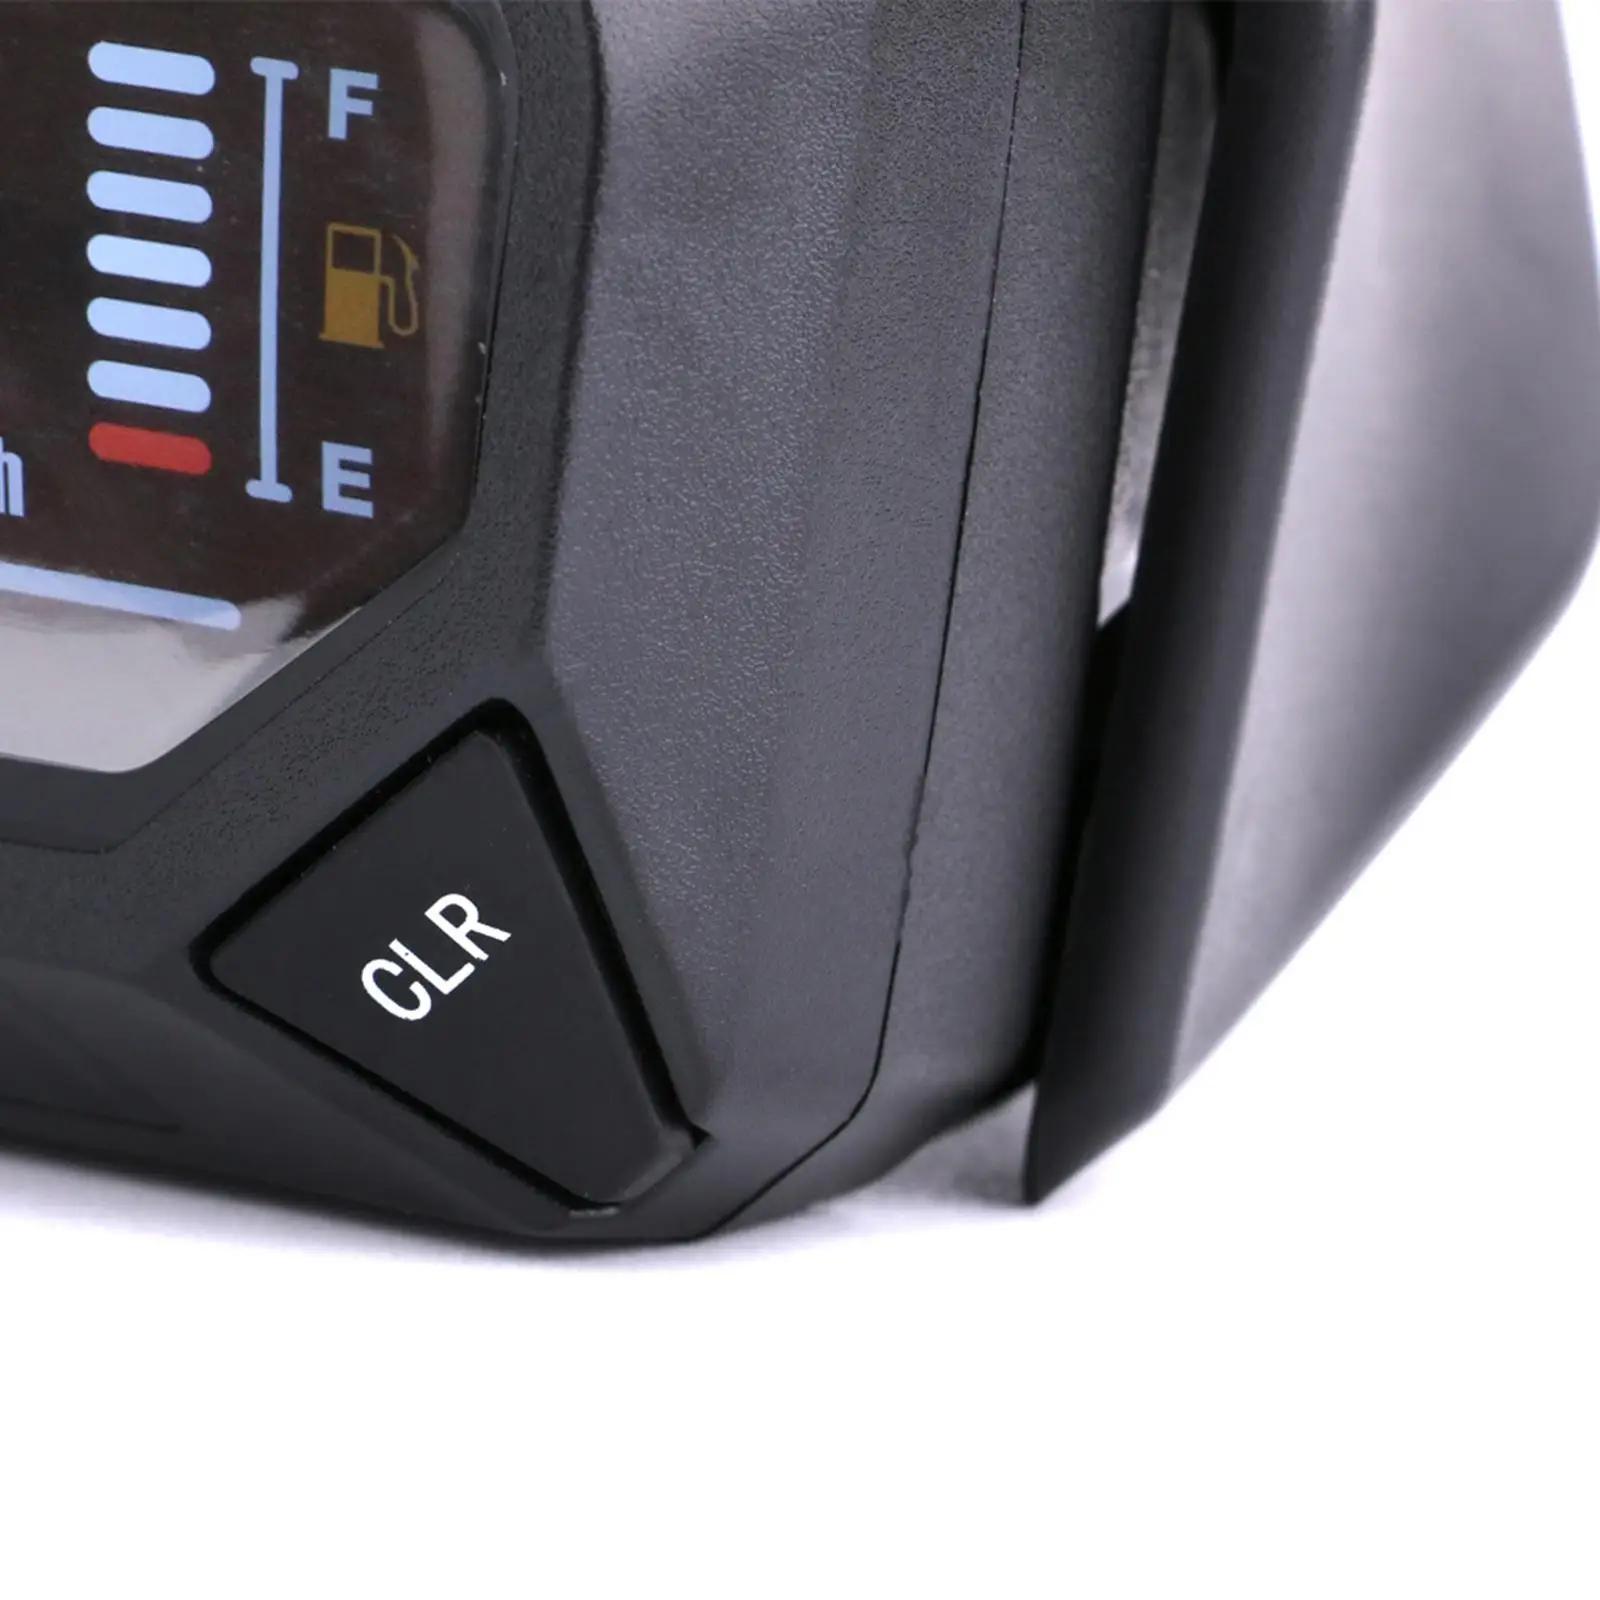 Universal LCD Digital Motorcycle Speedometer Odometer 199km/ rpm 6 Gears w/Backlight